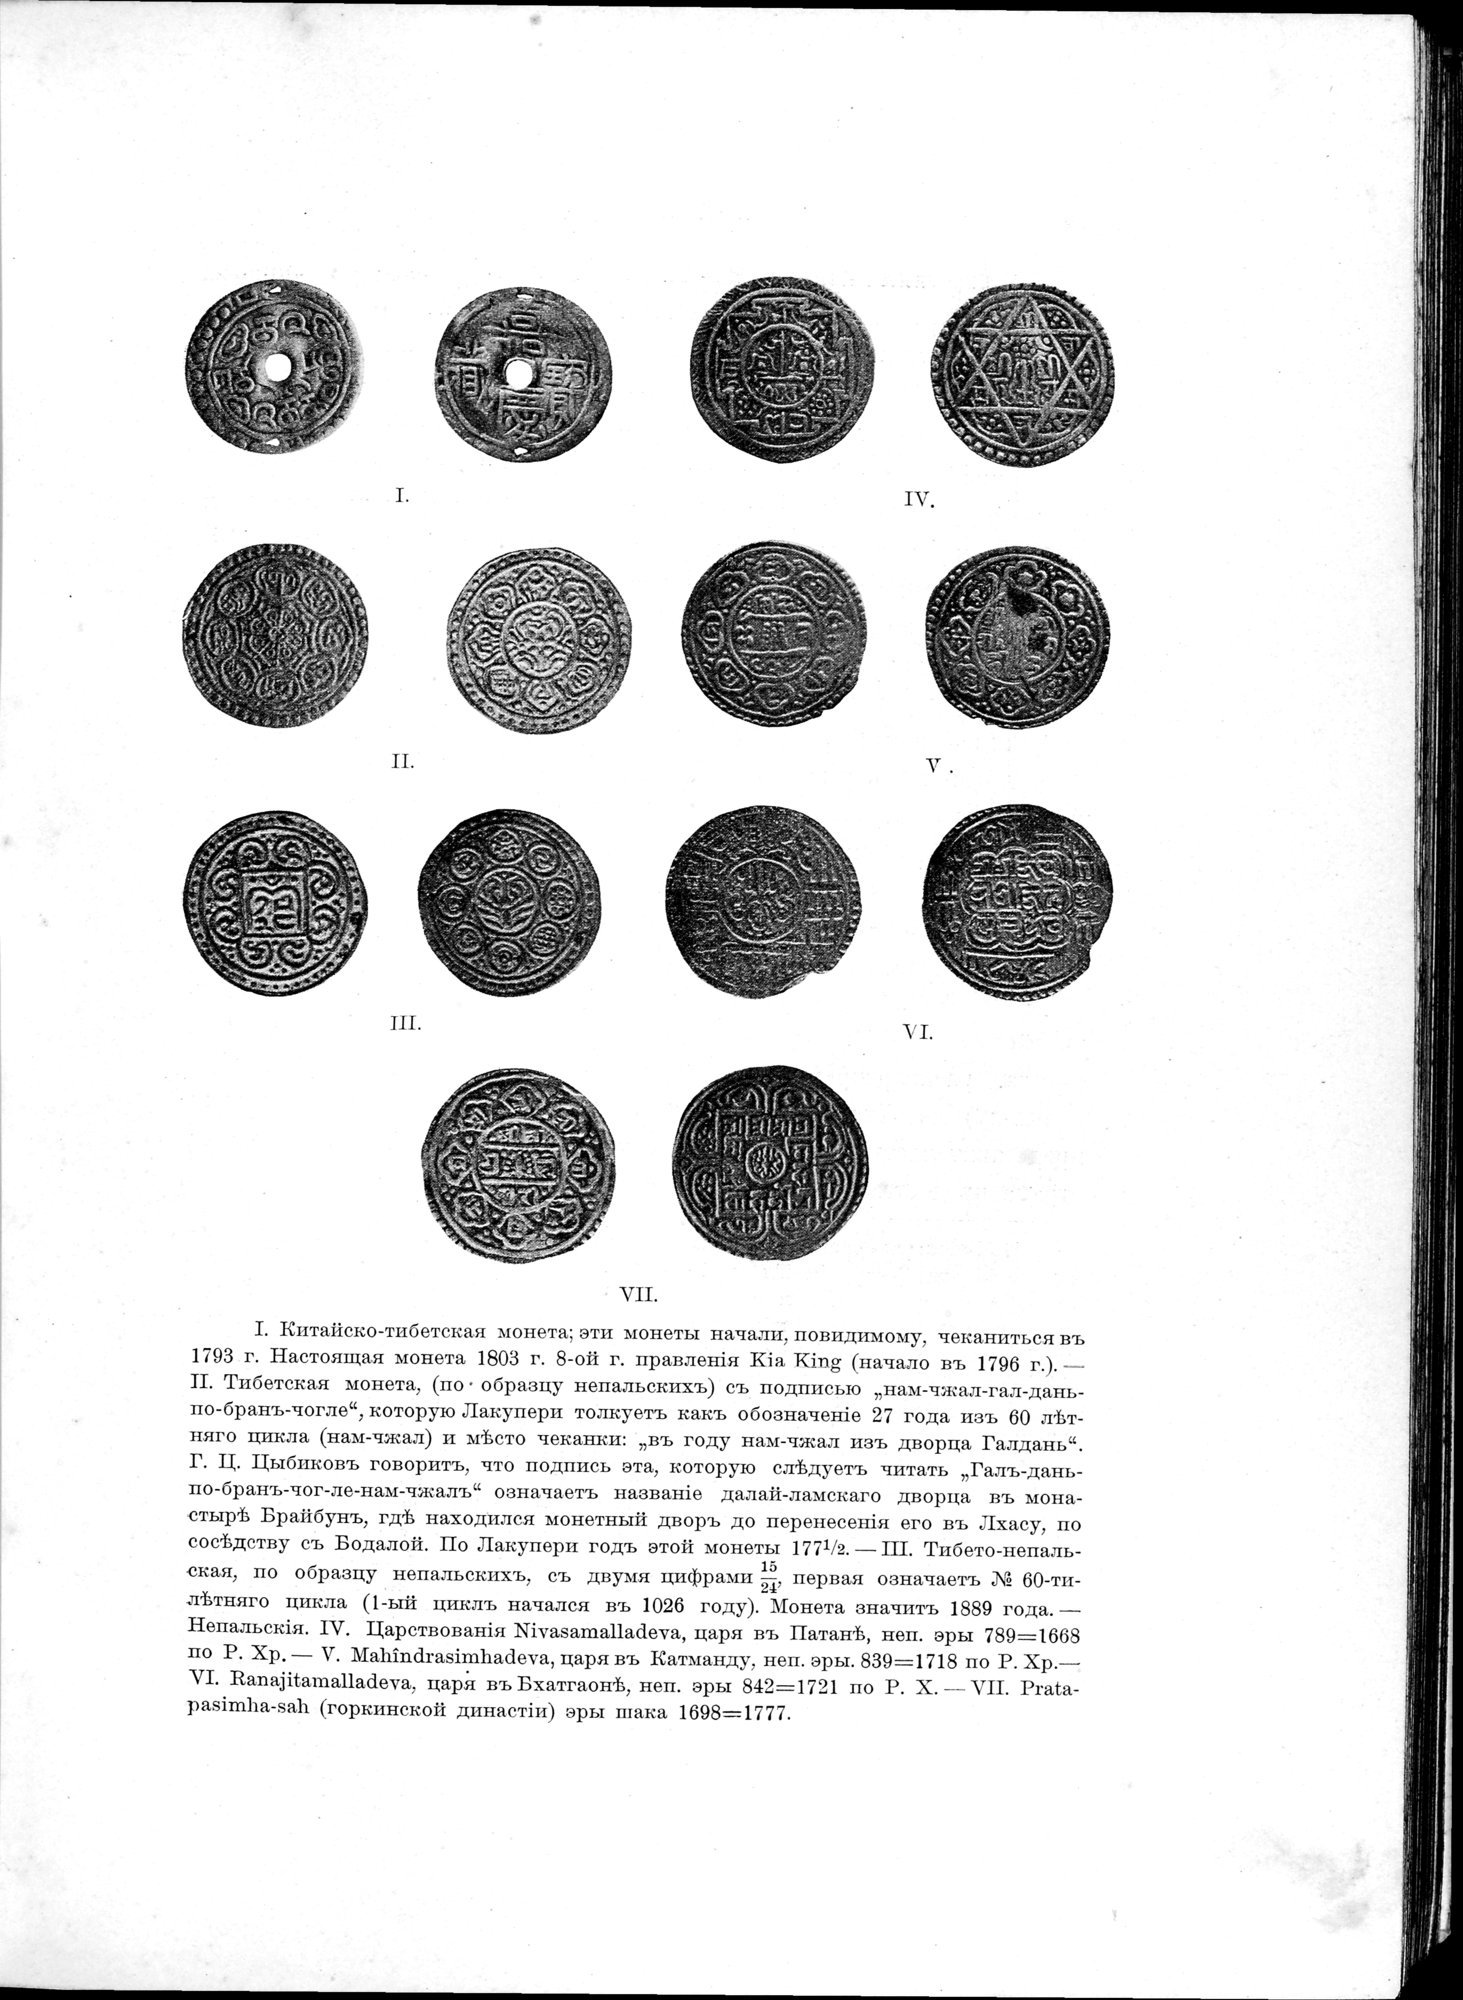 Mongoliia i Kam : vol.2 / Page 53 (Grayscale High Resolution Image)